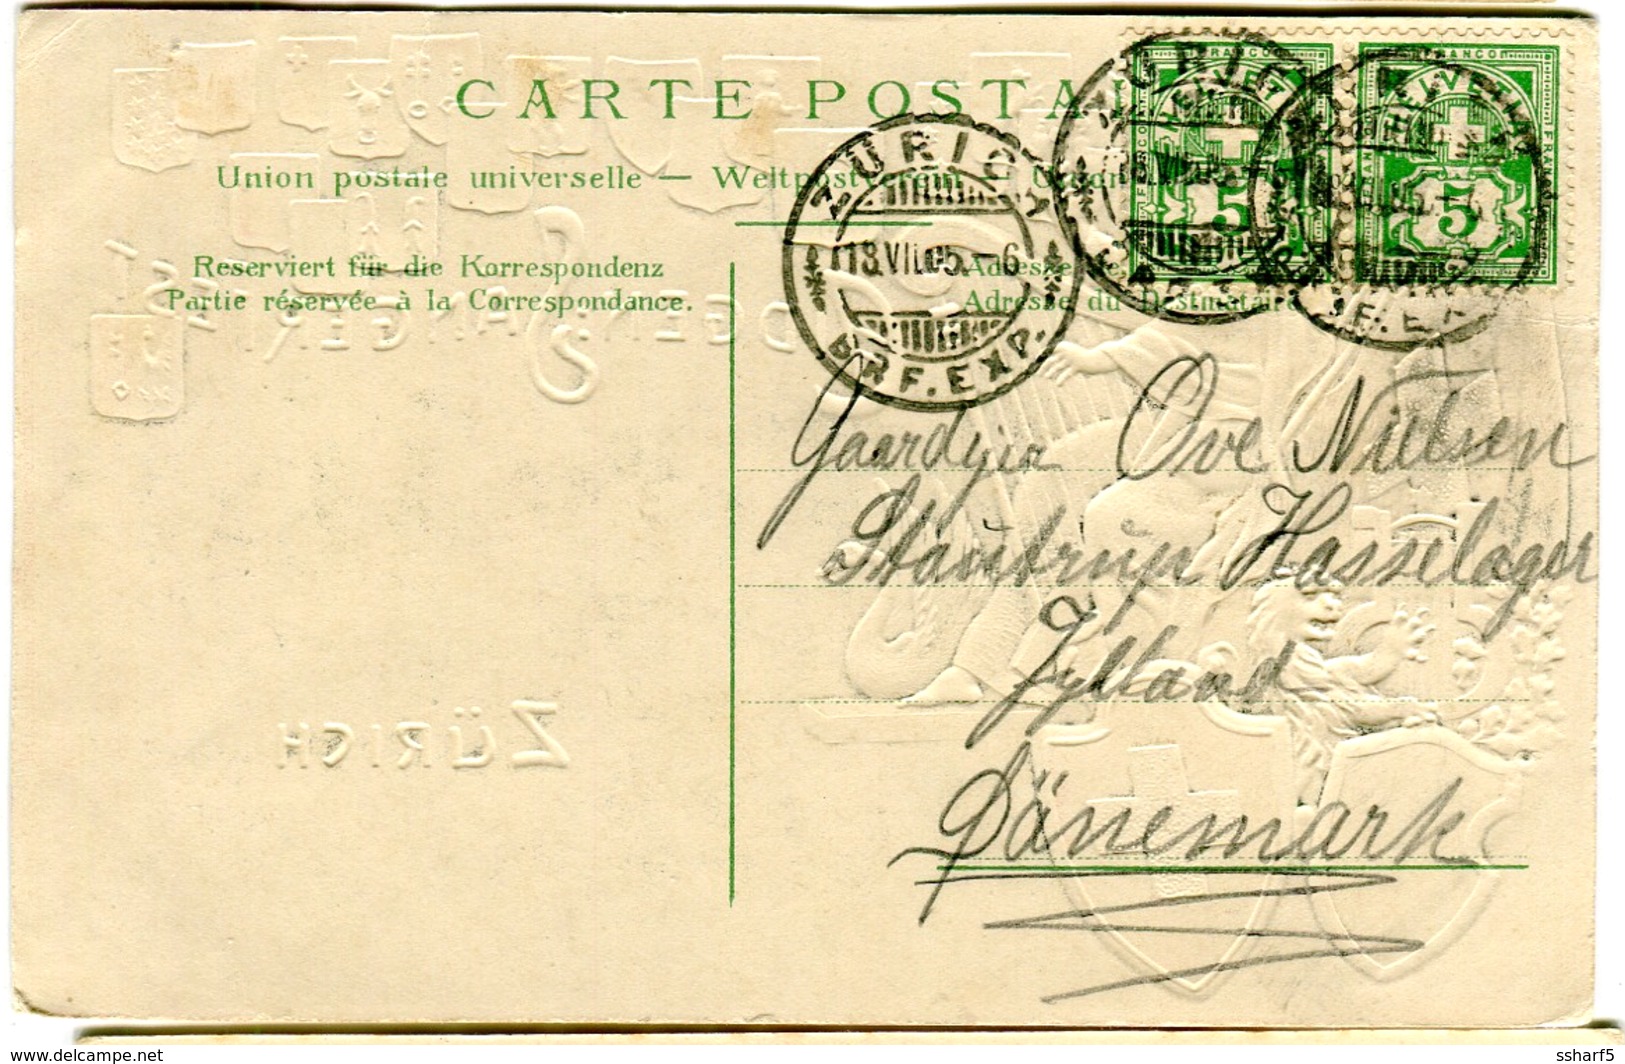 ZÜRICH - EIDGEN-SÄNGERFEST 1905 - PRÄGEKARTE - Carte En Relief Embossed Card 1905 - Zürich